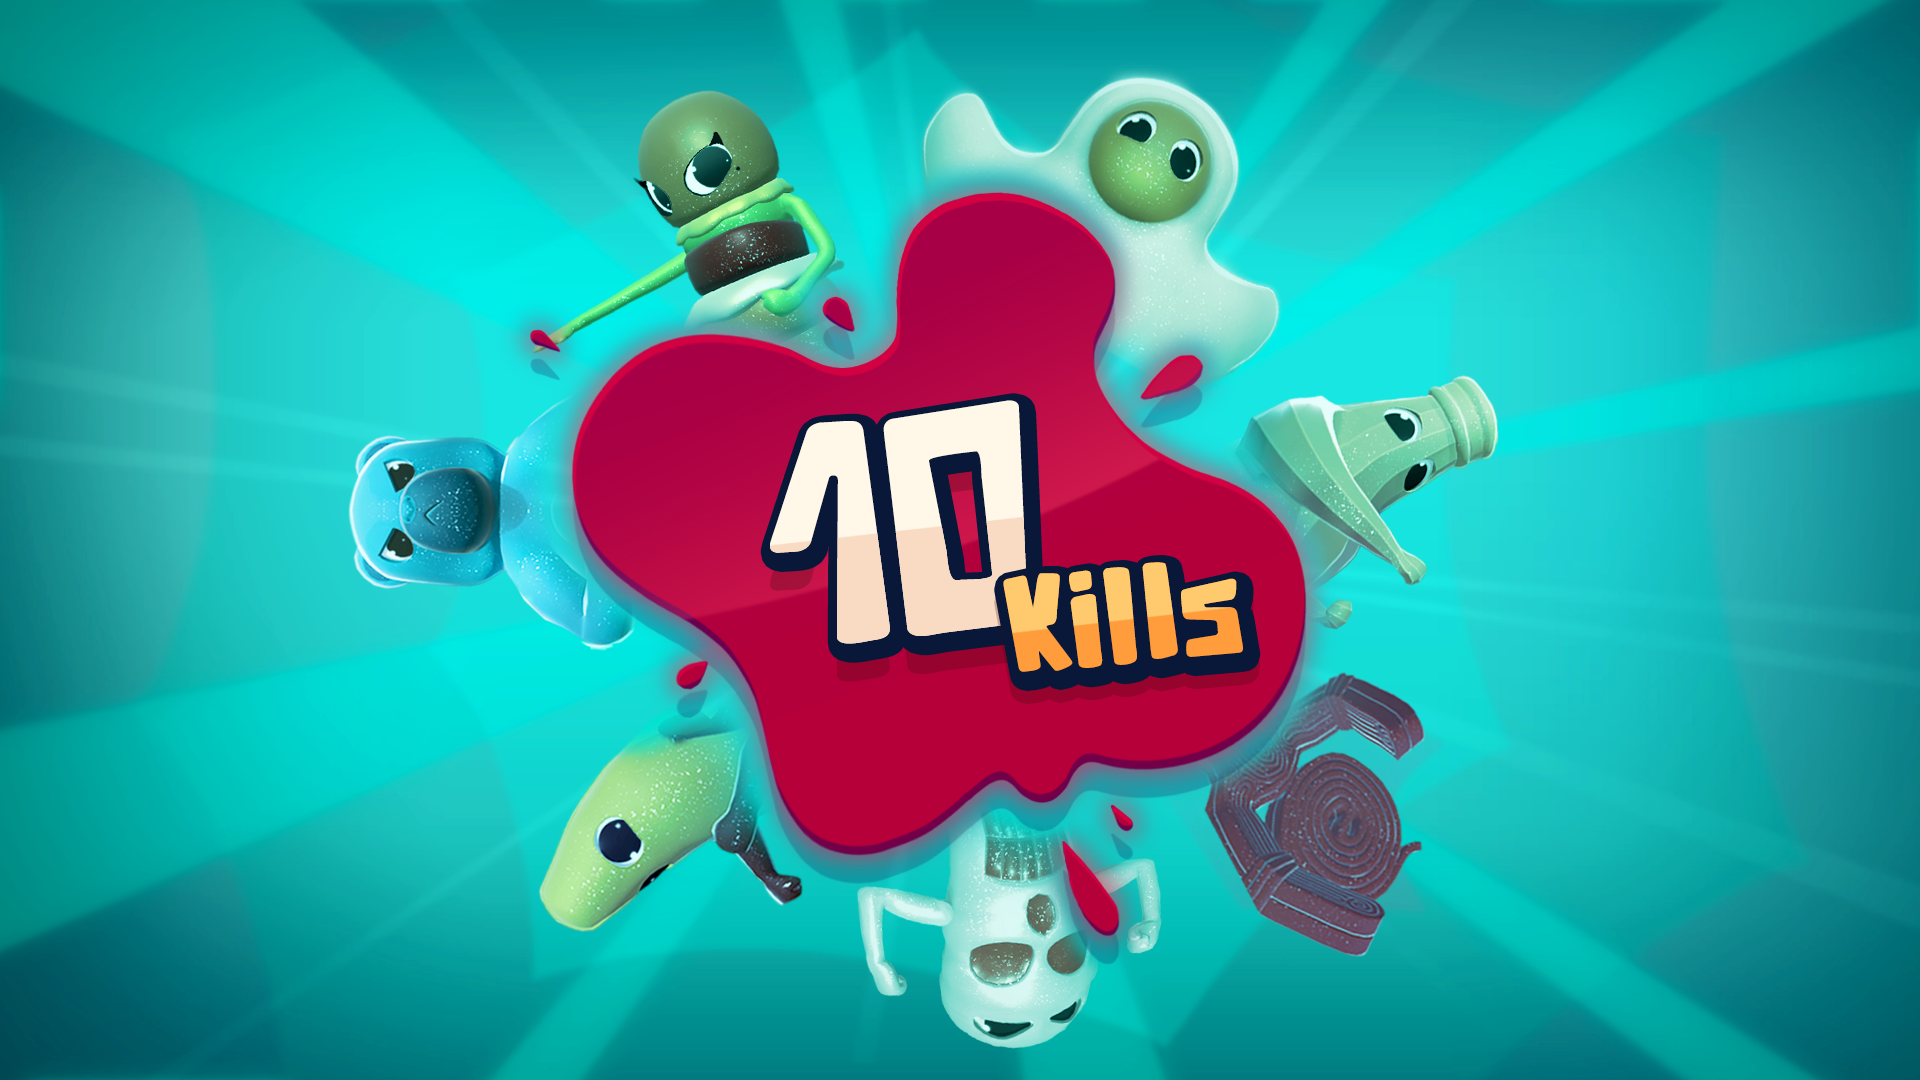 Icon for 10 kills